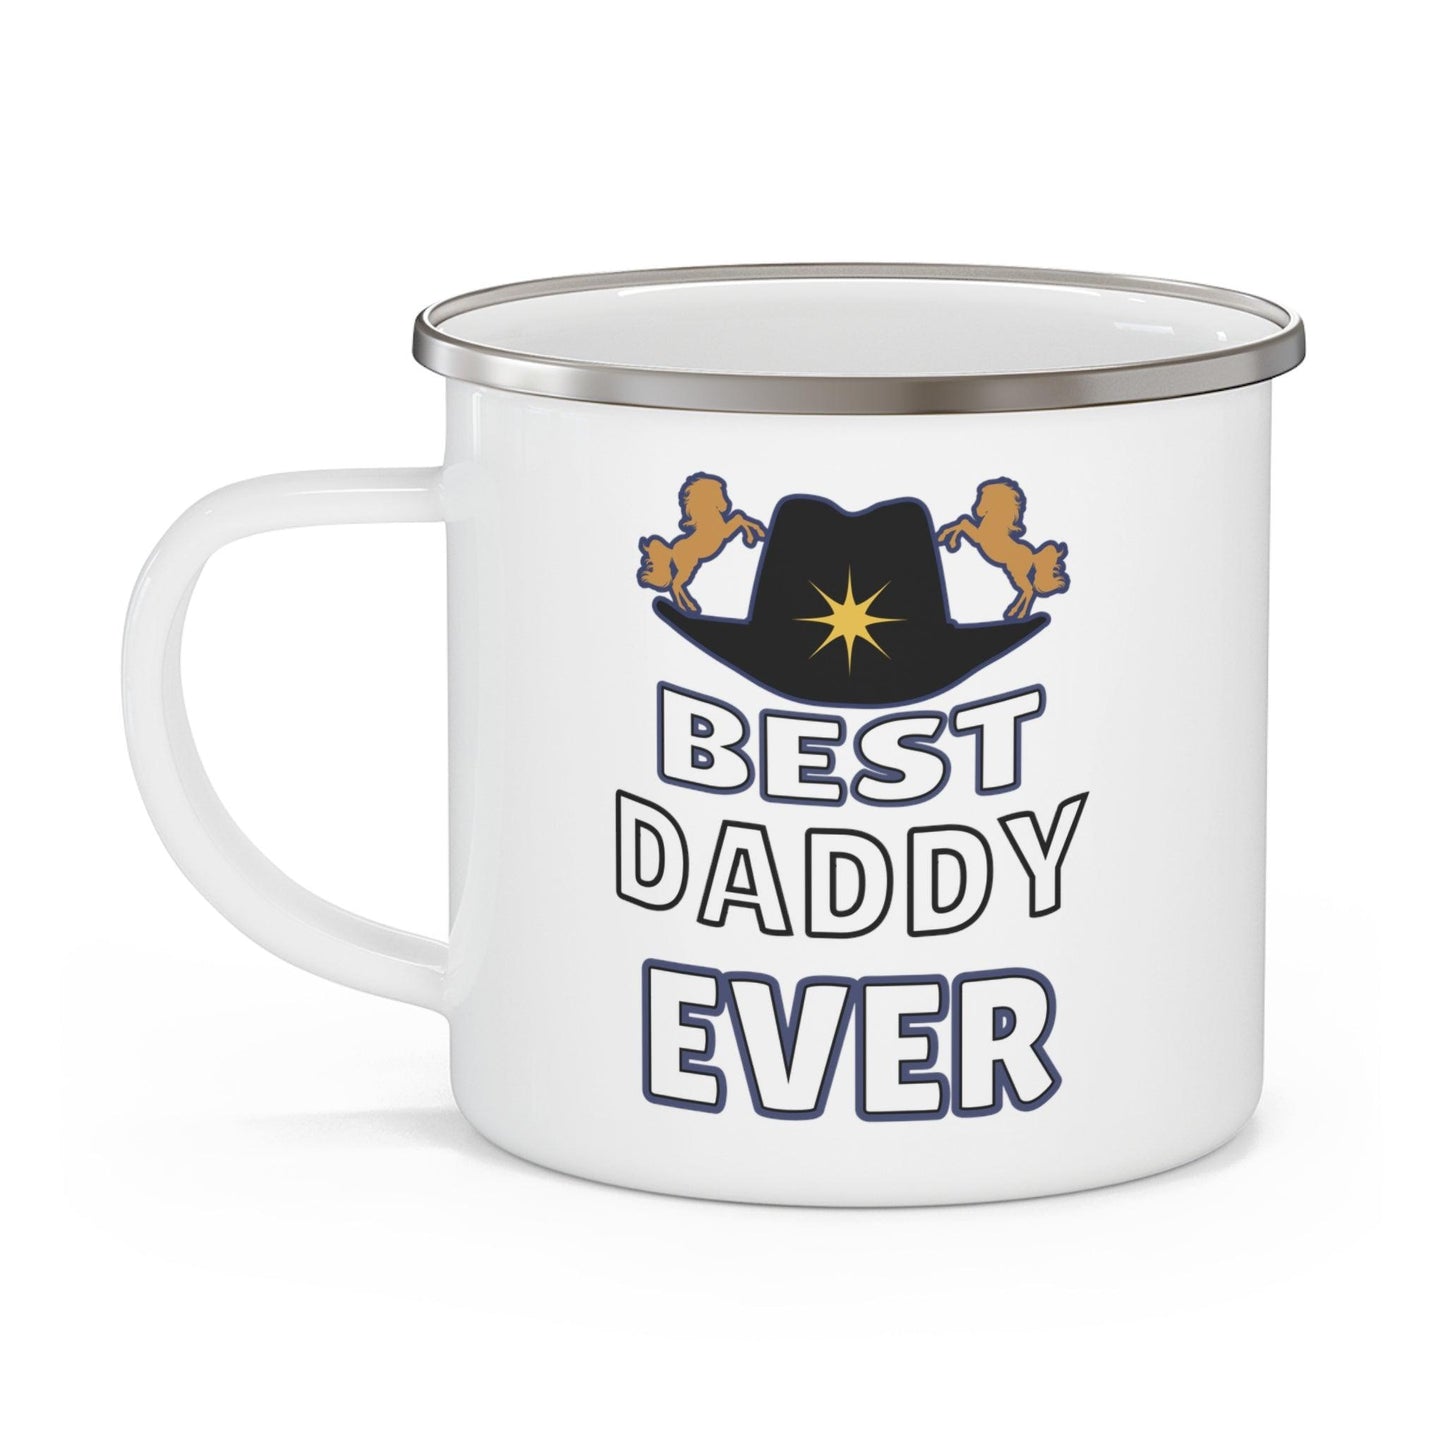 Best Daddy Ever Mug, Enamel Camping Mug, Camping gift, Gift for dad, Father's day gift, Dad Mug, Dad gift